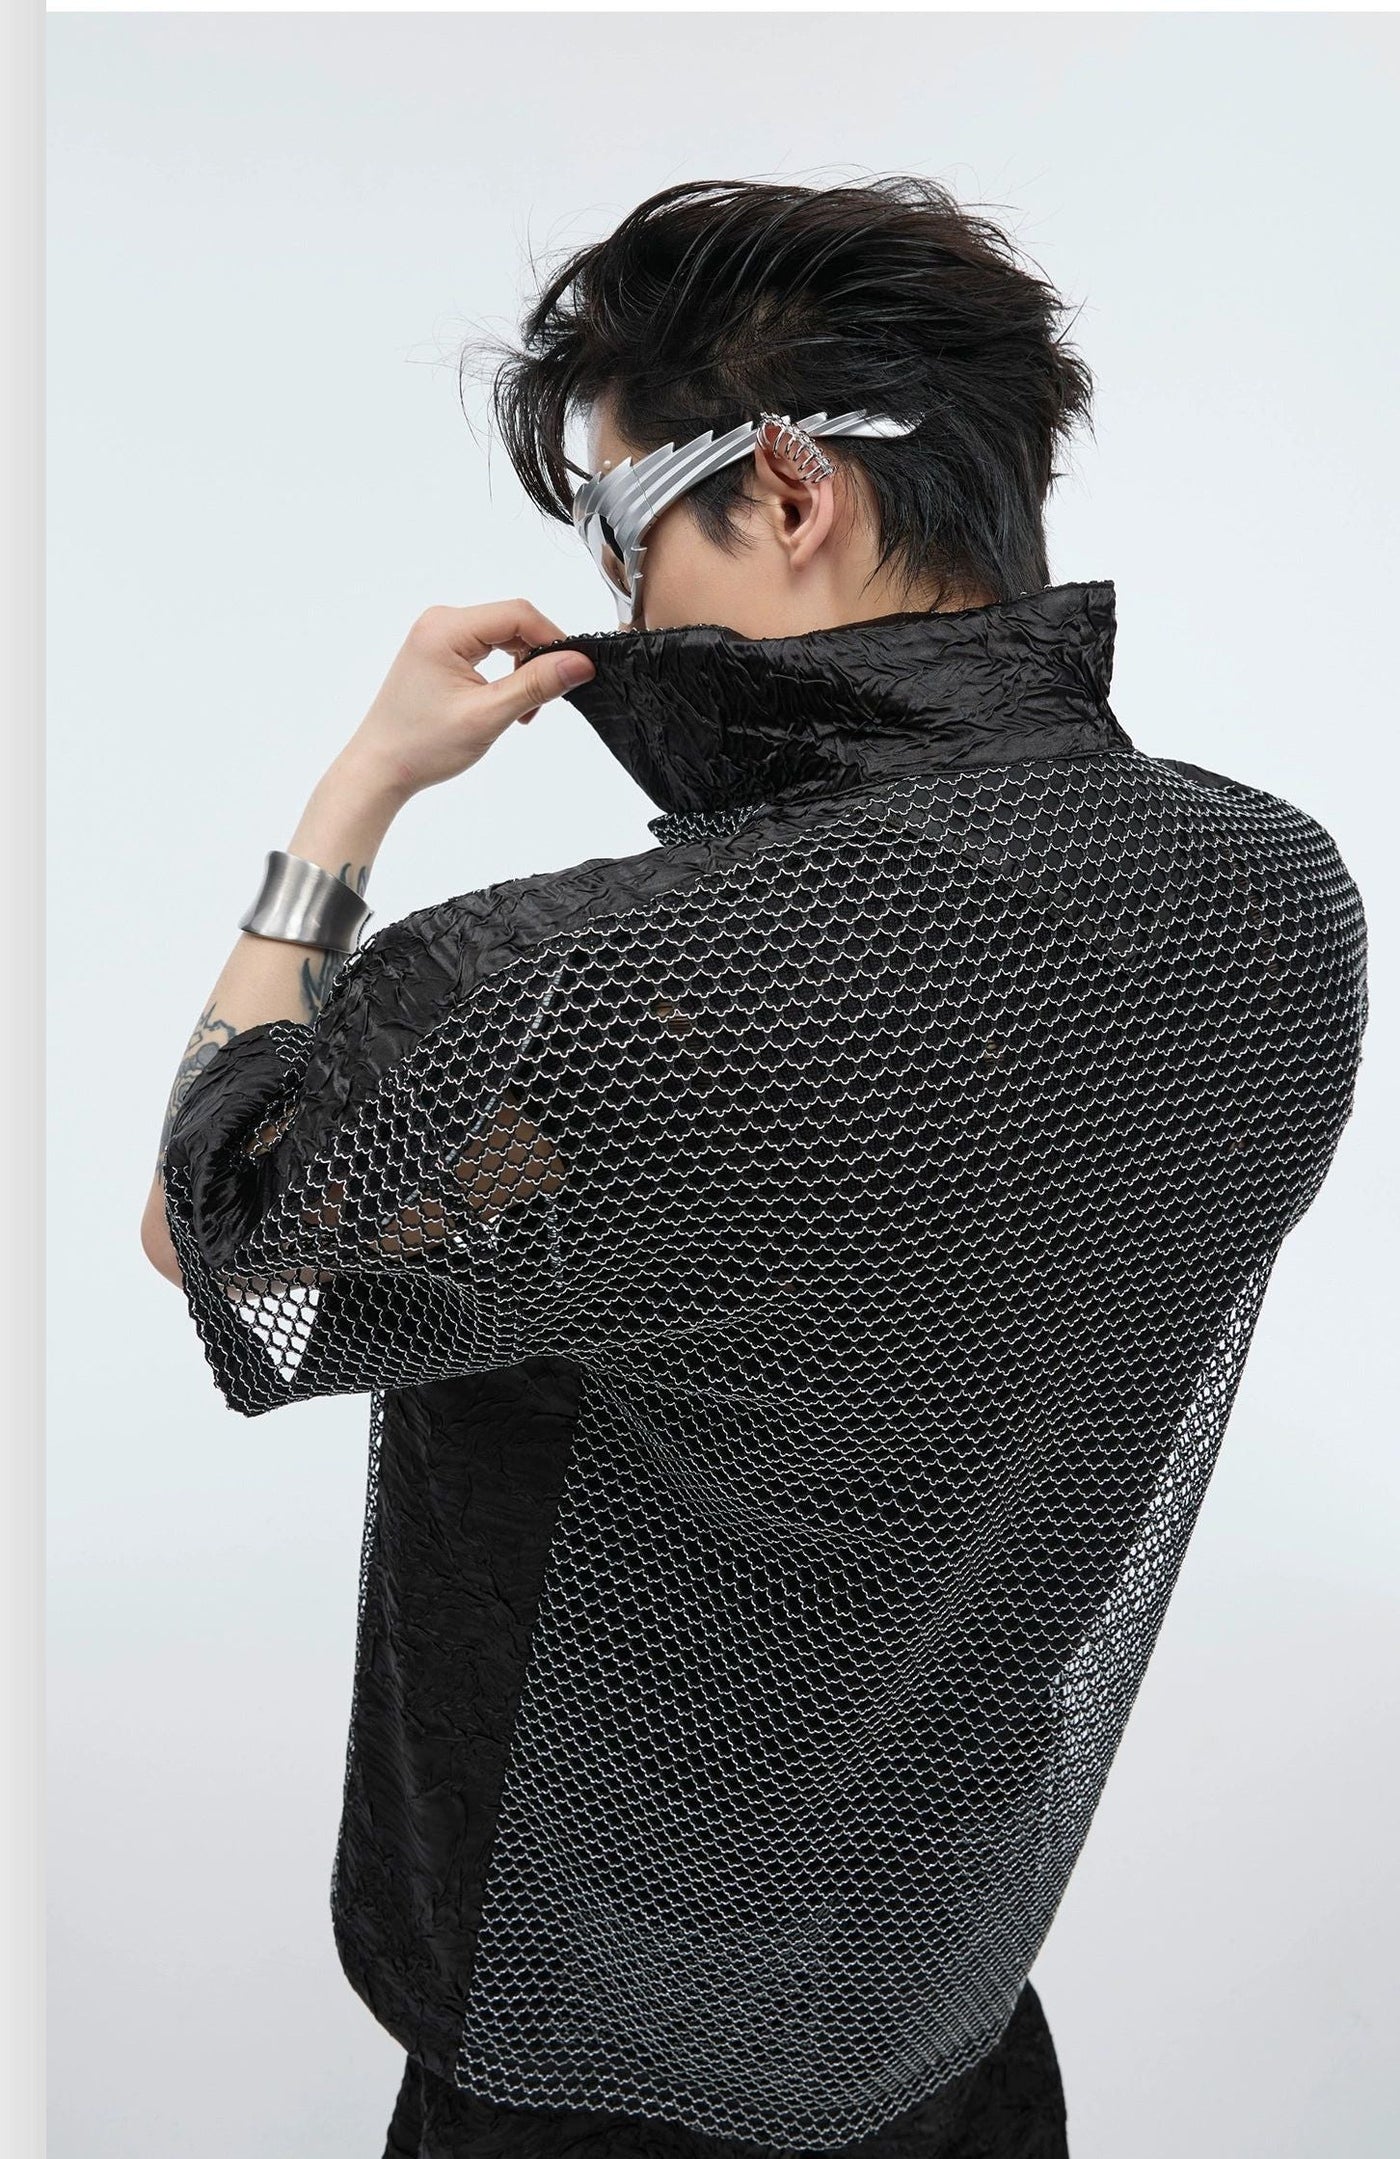 Mesh Net Buttoned Shirt Korean Street Fashion Shirt By Argue Culture Shop Online at OH Vault